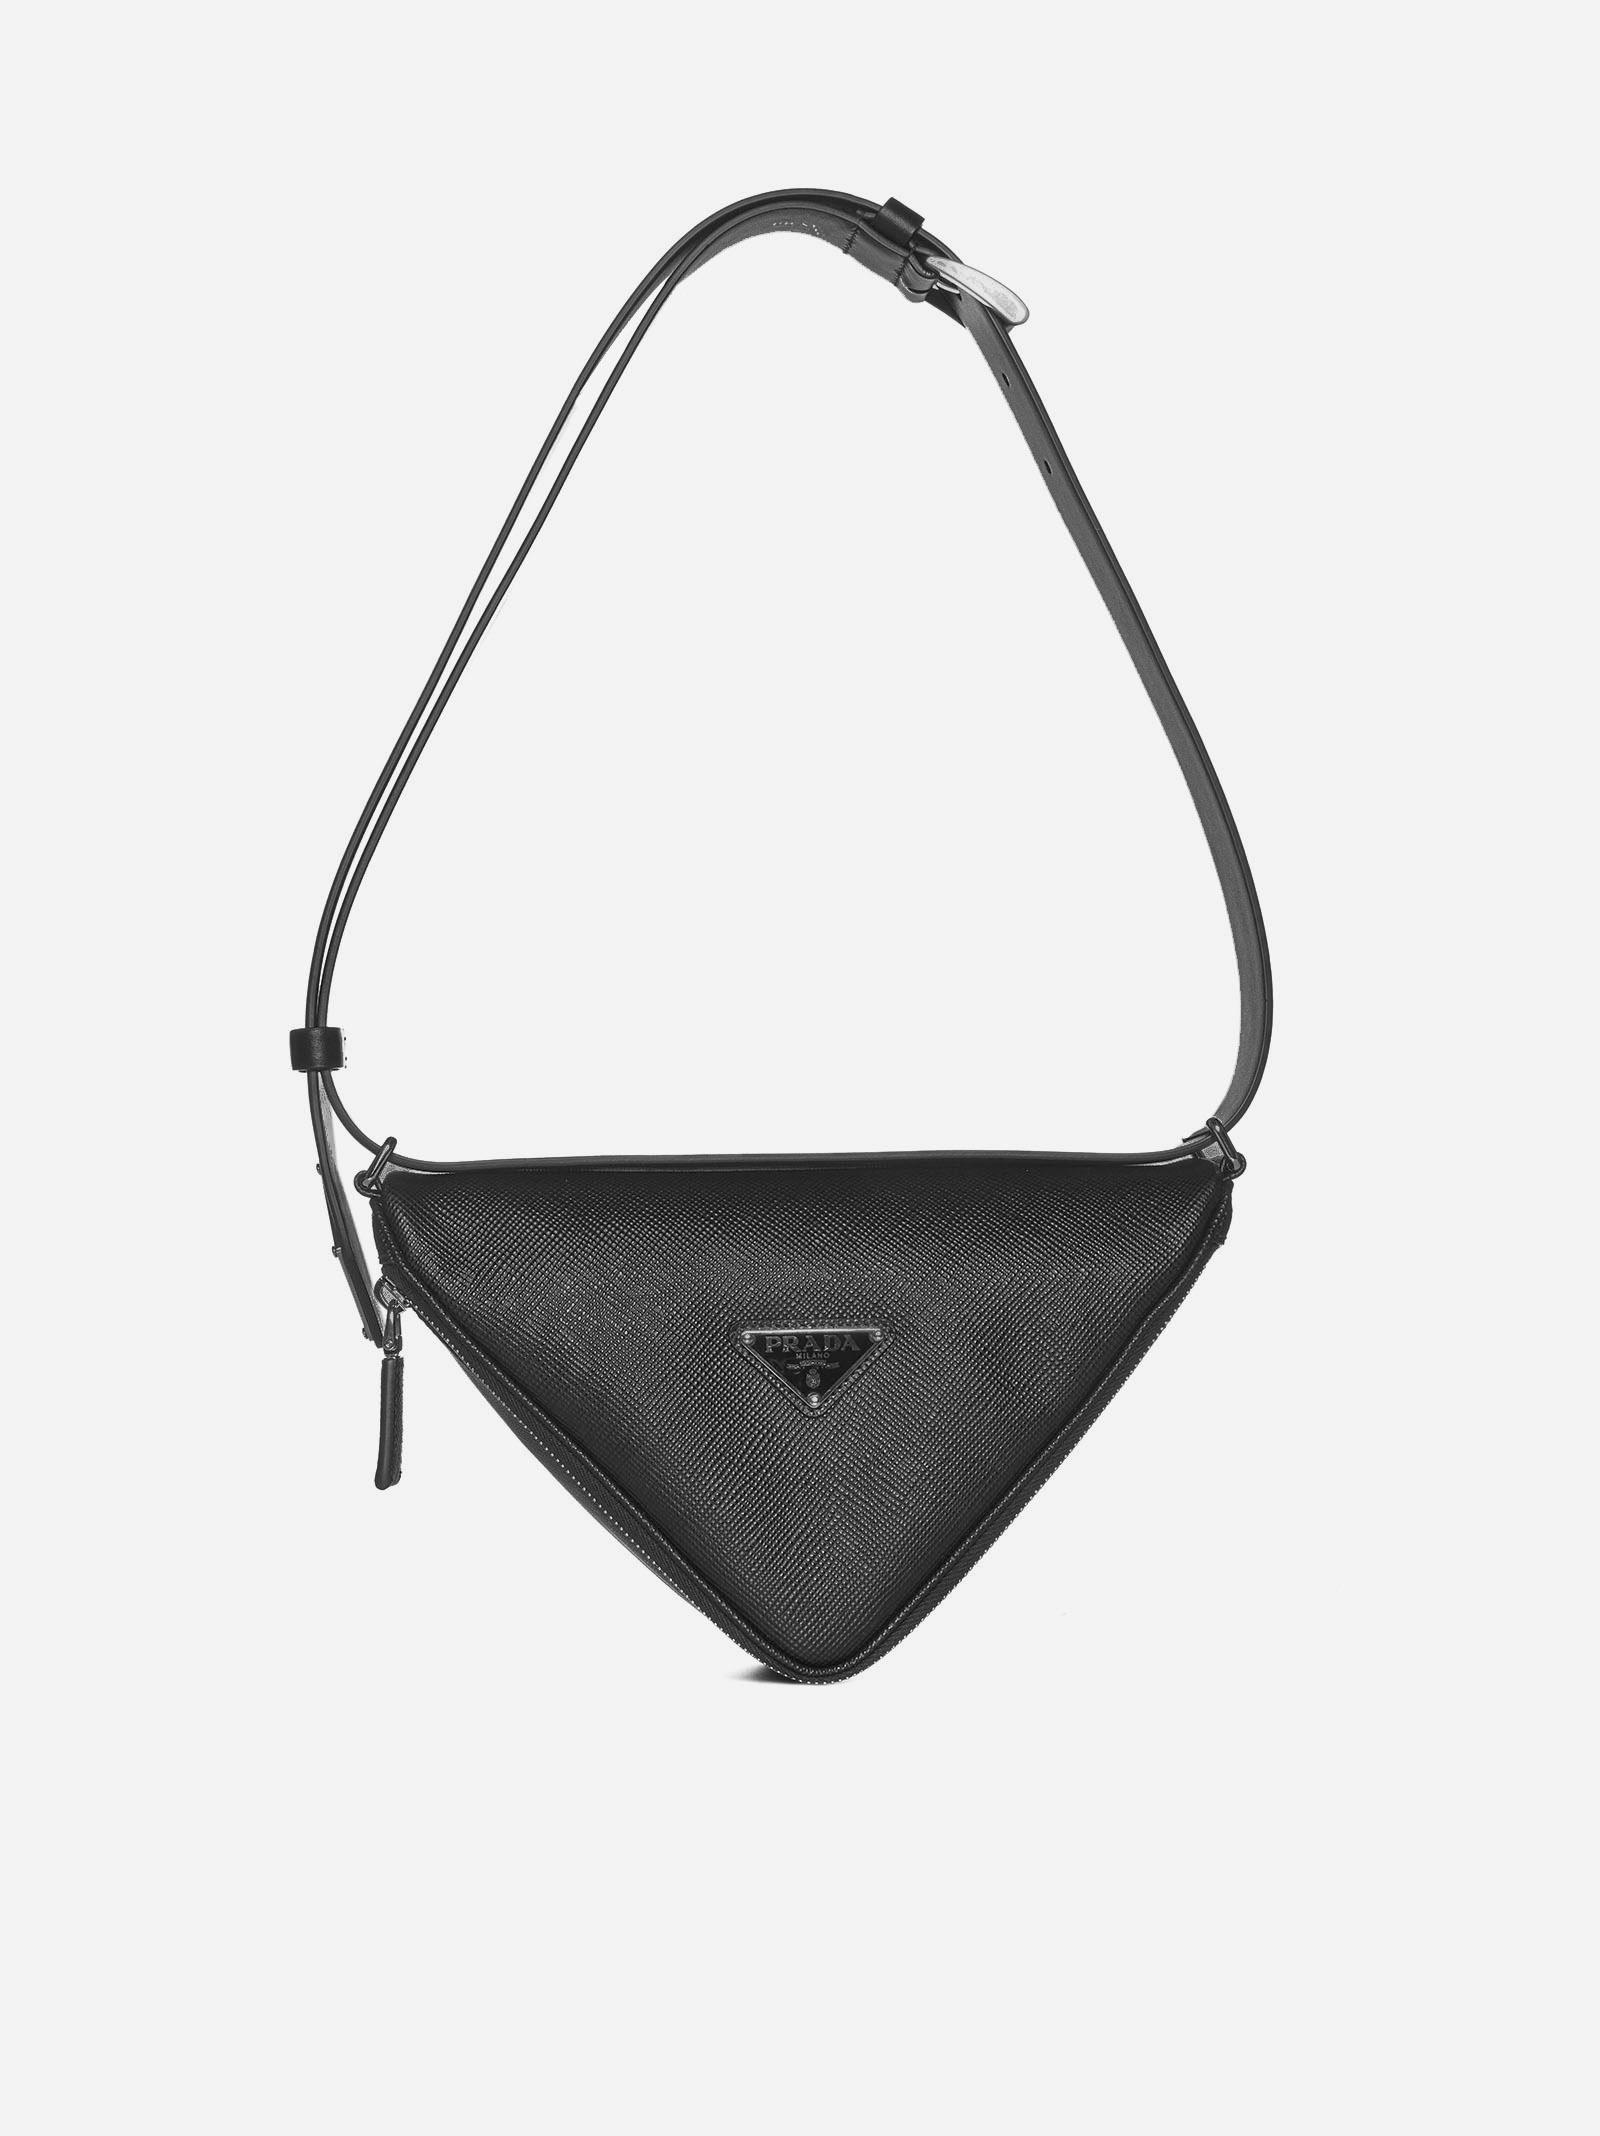 Guess Nylon Phone Bag with Metal Triangle Logo & Adjustable Shoulder Strap